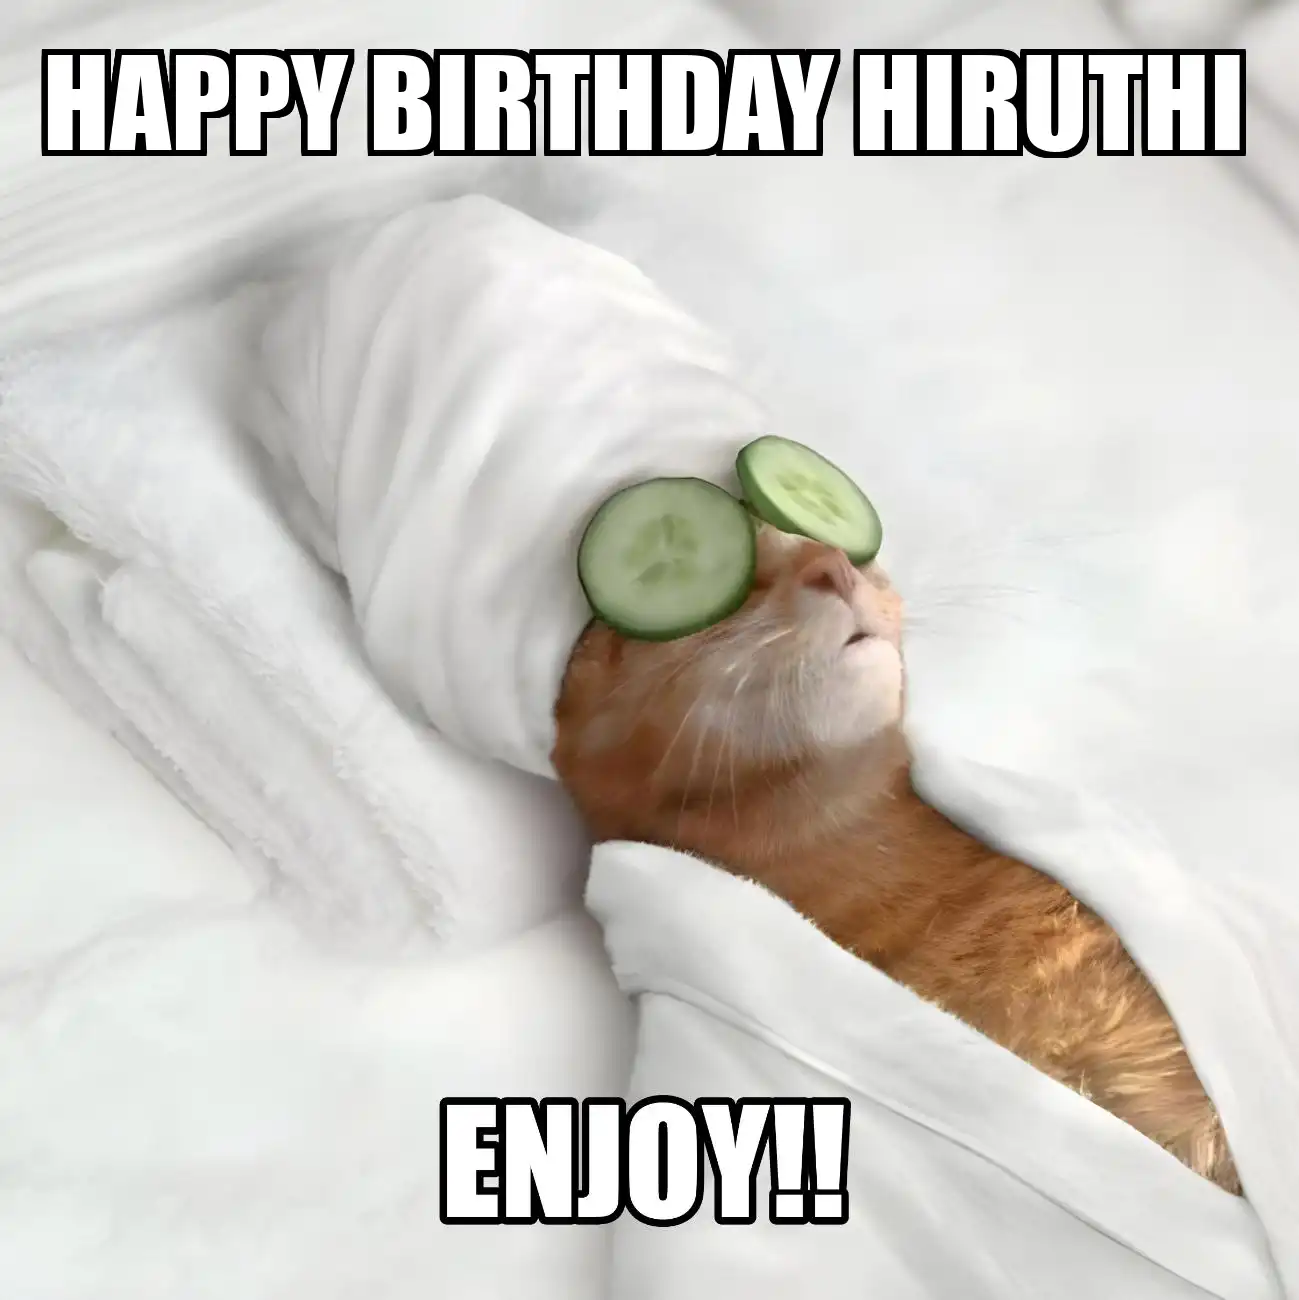 Happy Birthday Hiruthi Enjoy Cat Meme